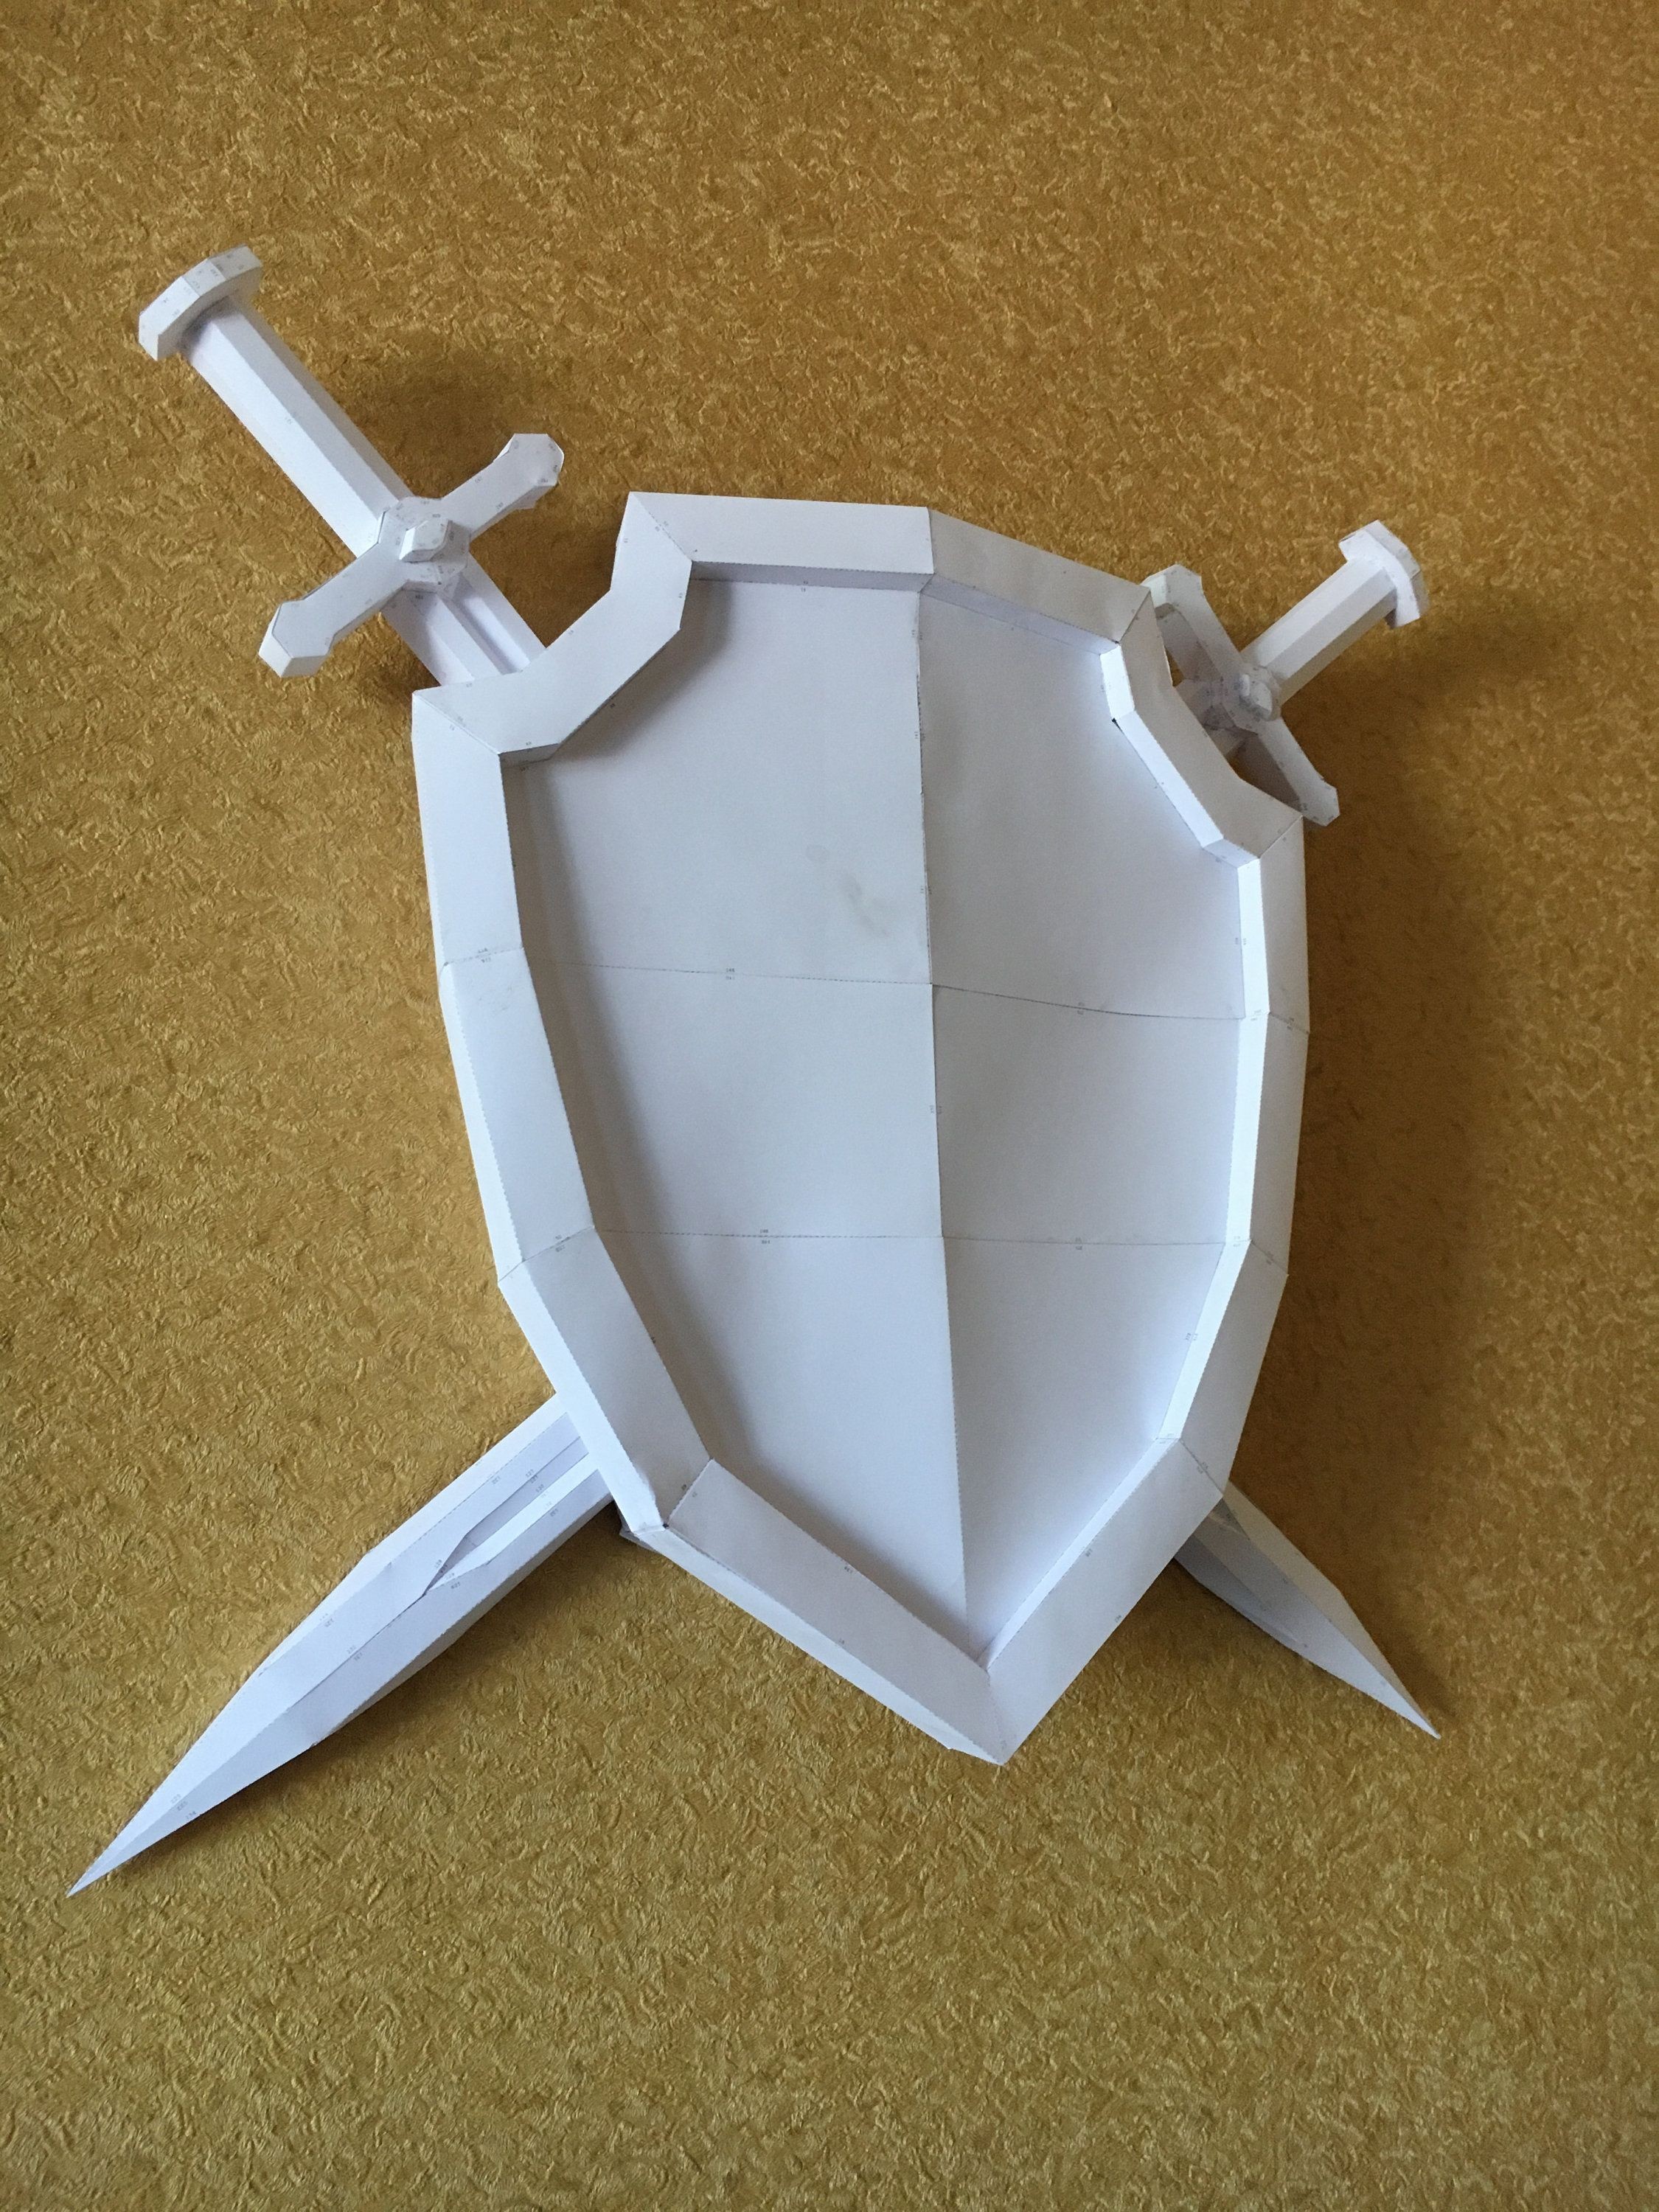 Lion Papercraft Sword Shield Diy Papercraft Model ÐÑÐ¼Ð°Ð¶Ð½ÑÐµ Ð¸Ð·Ð´ÐµÐ Ð¸Ñ